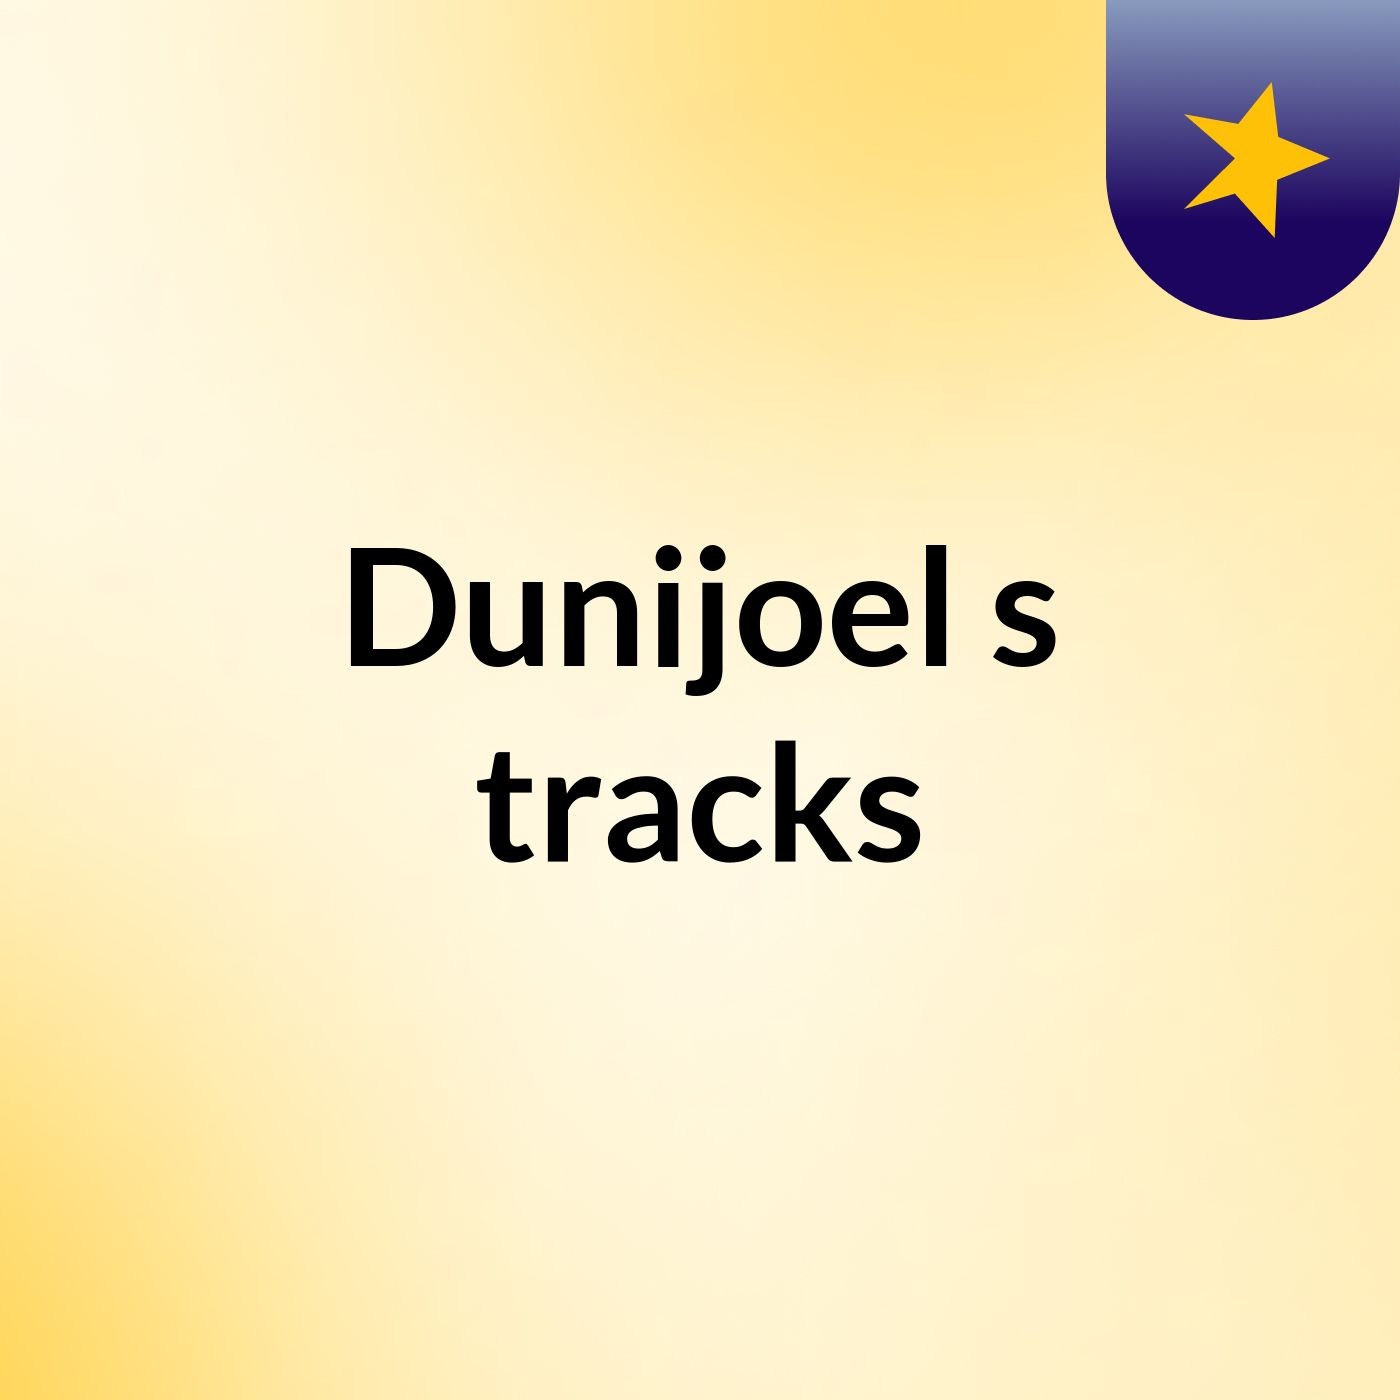 Dunijoel's tracks